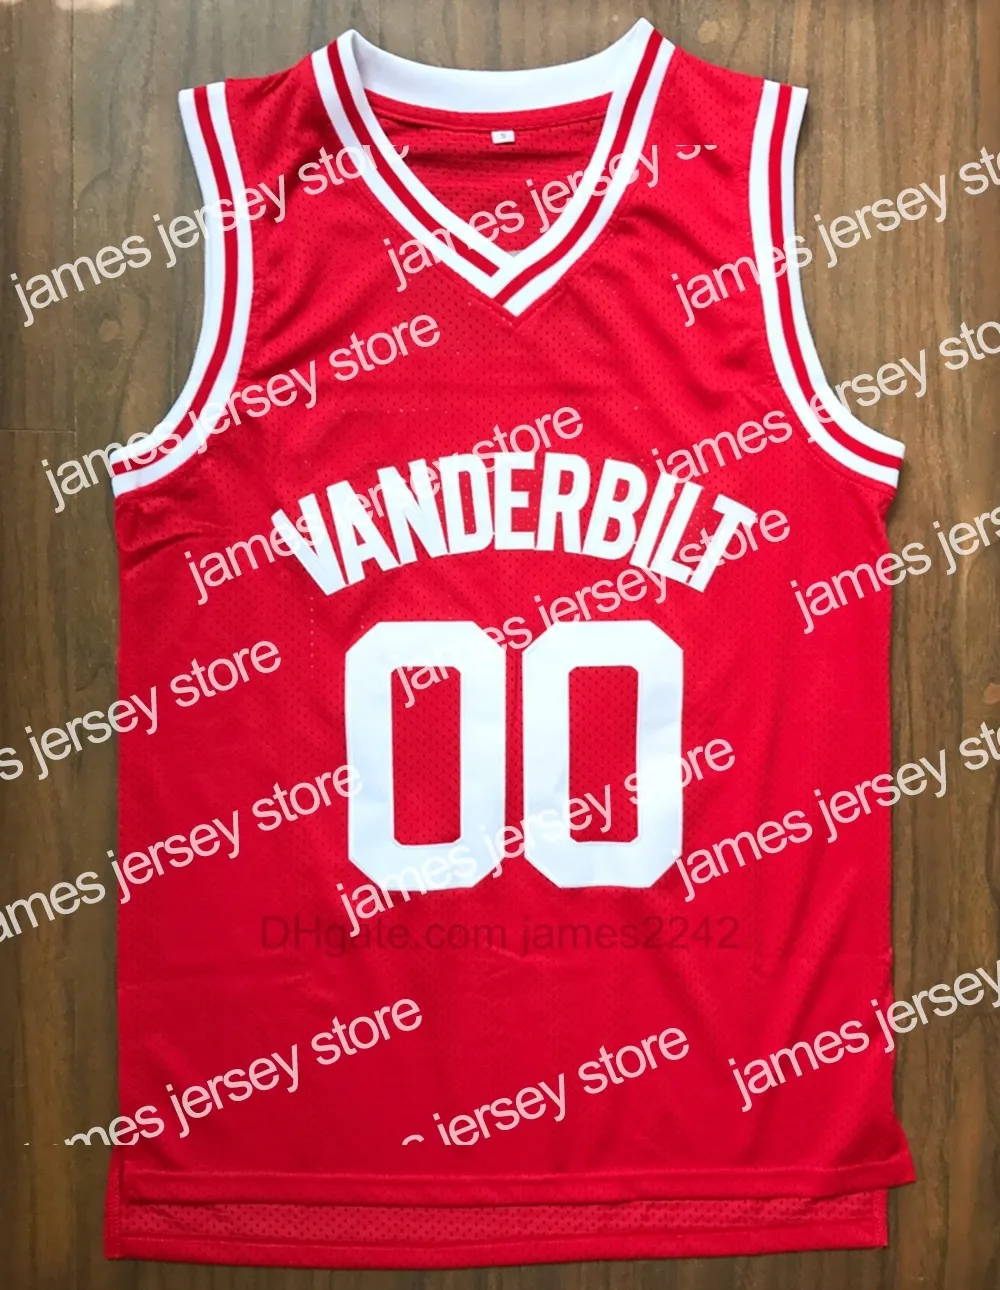 Basketball-Trikots Steve Urkel #00 Vanderbilt HS Herren-Basketball-Trikot, komplett genäht, Rot, Größe S-XXL, Sport, Top-Qualität